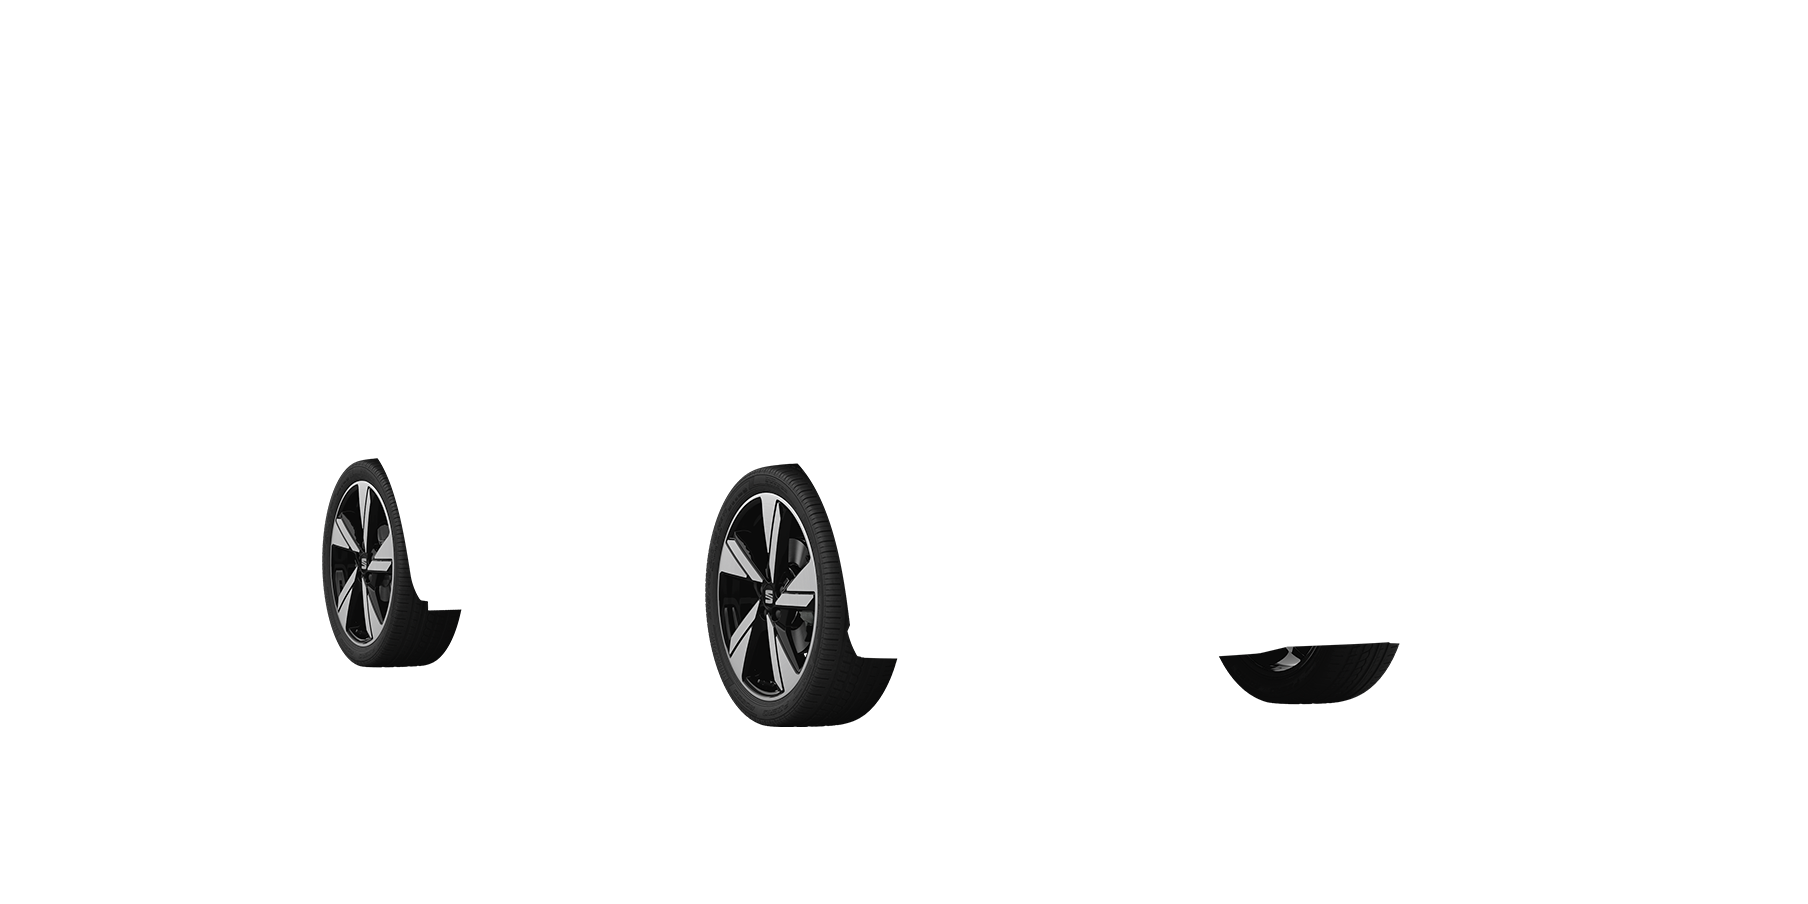 seat ibiza style performance 18 inch black machined alloy wheels